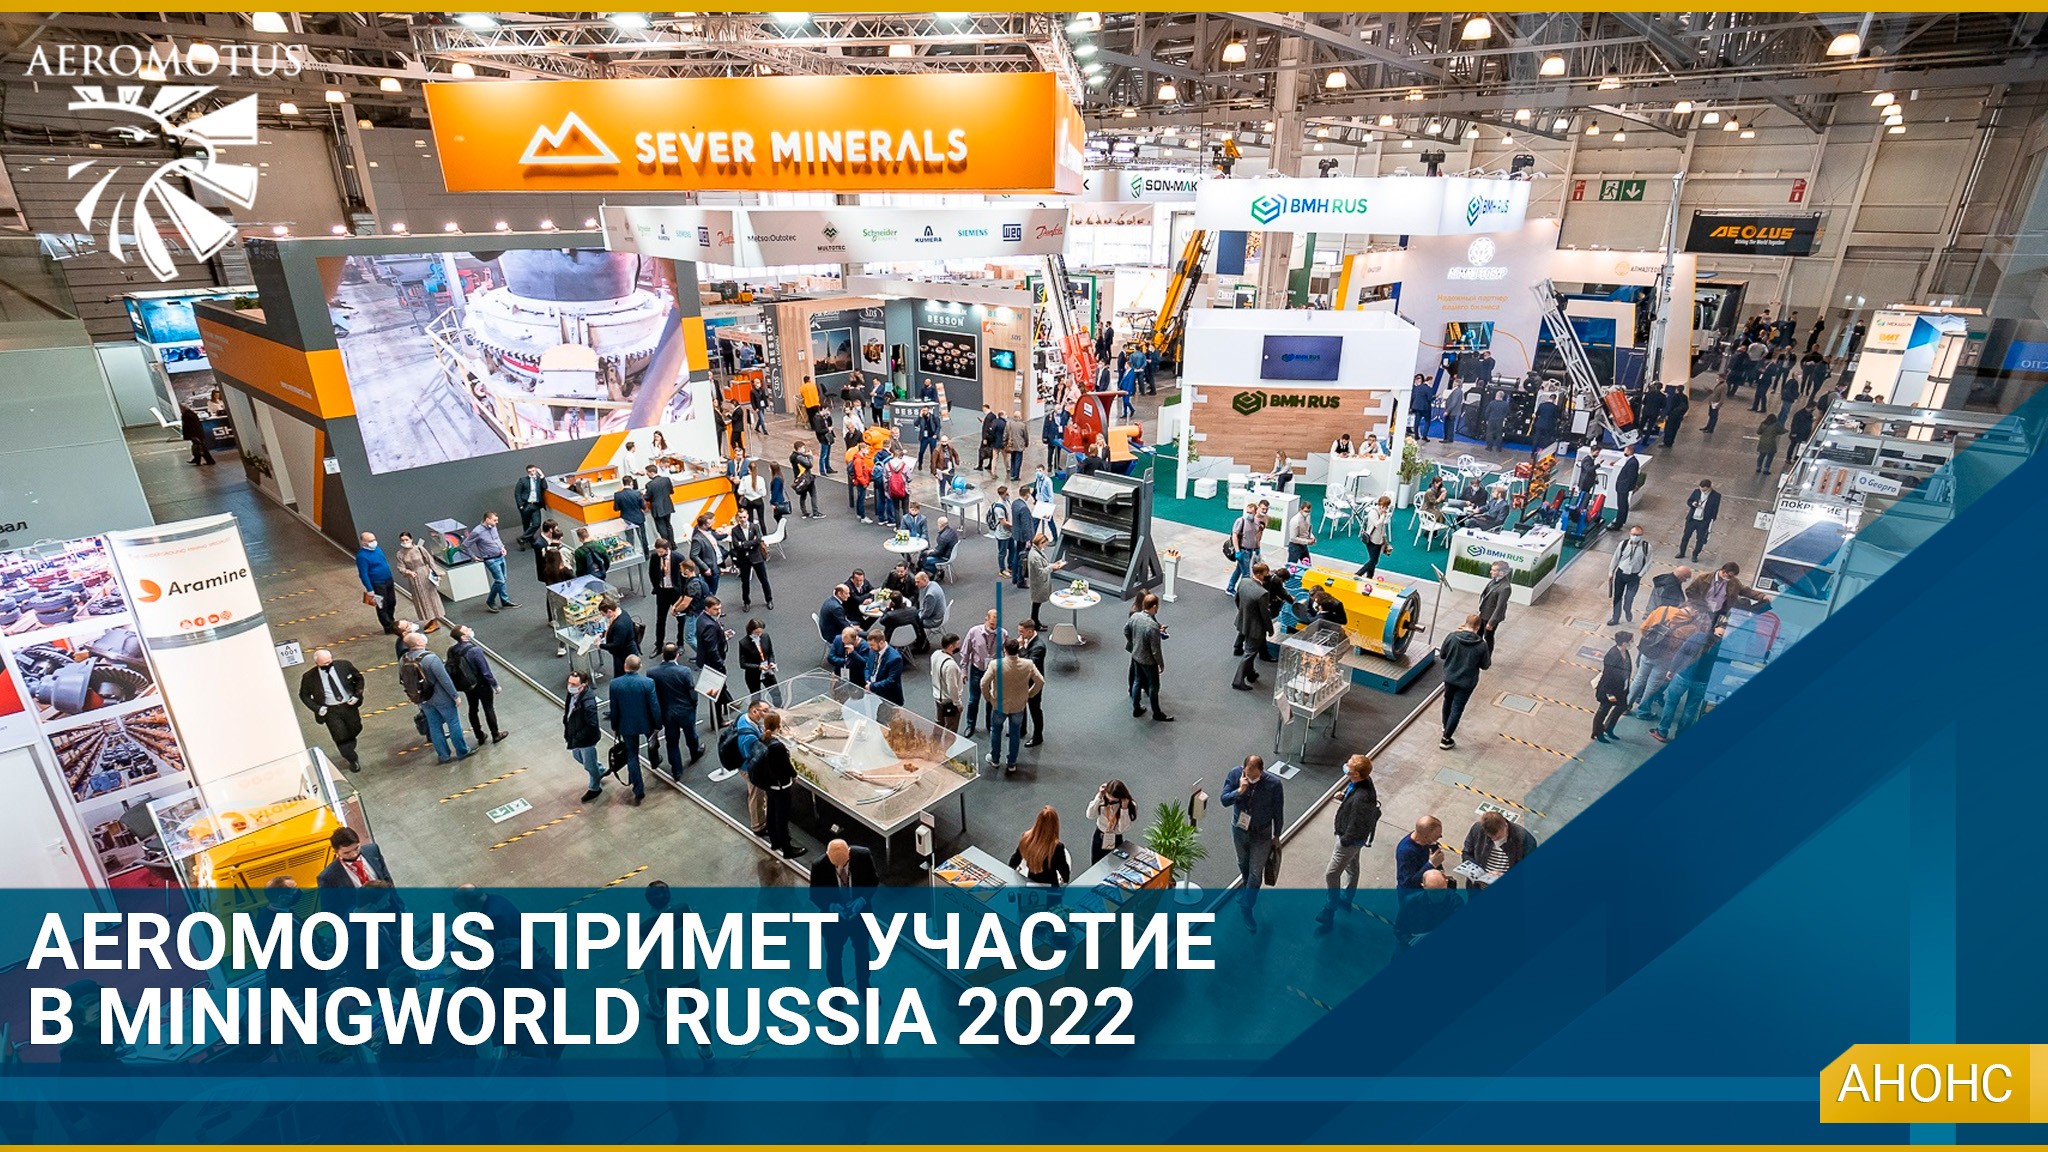 Aeromotus will take part in Miningworld Russia